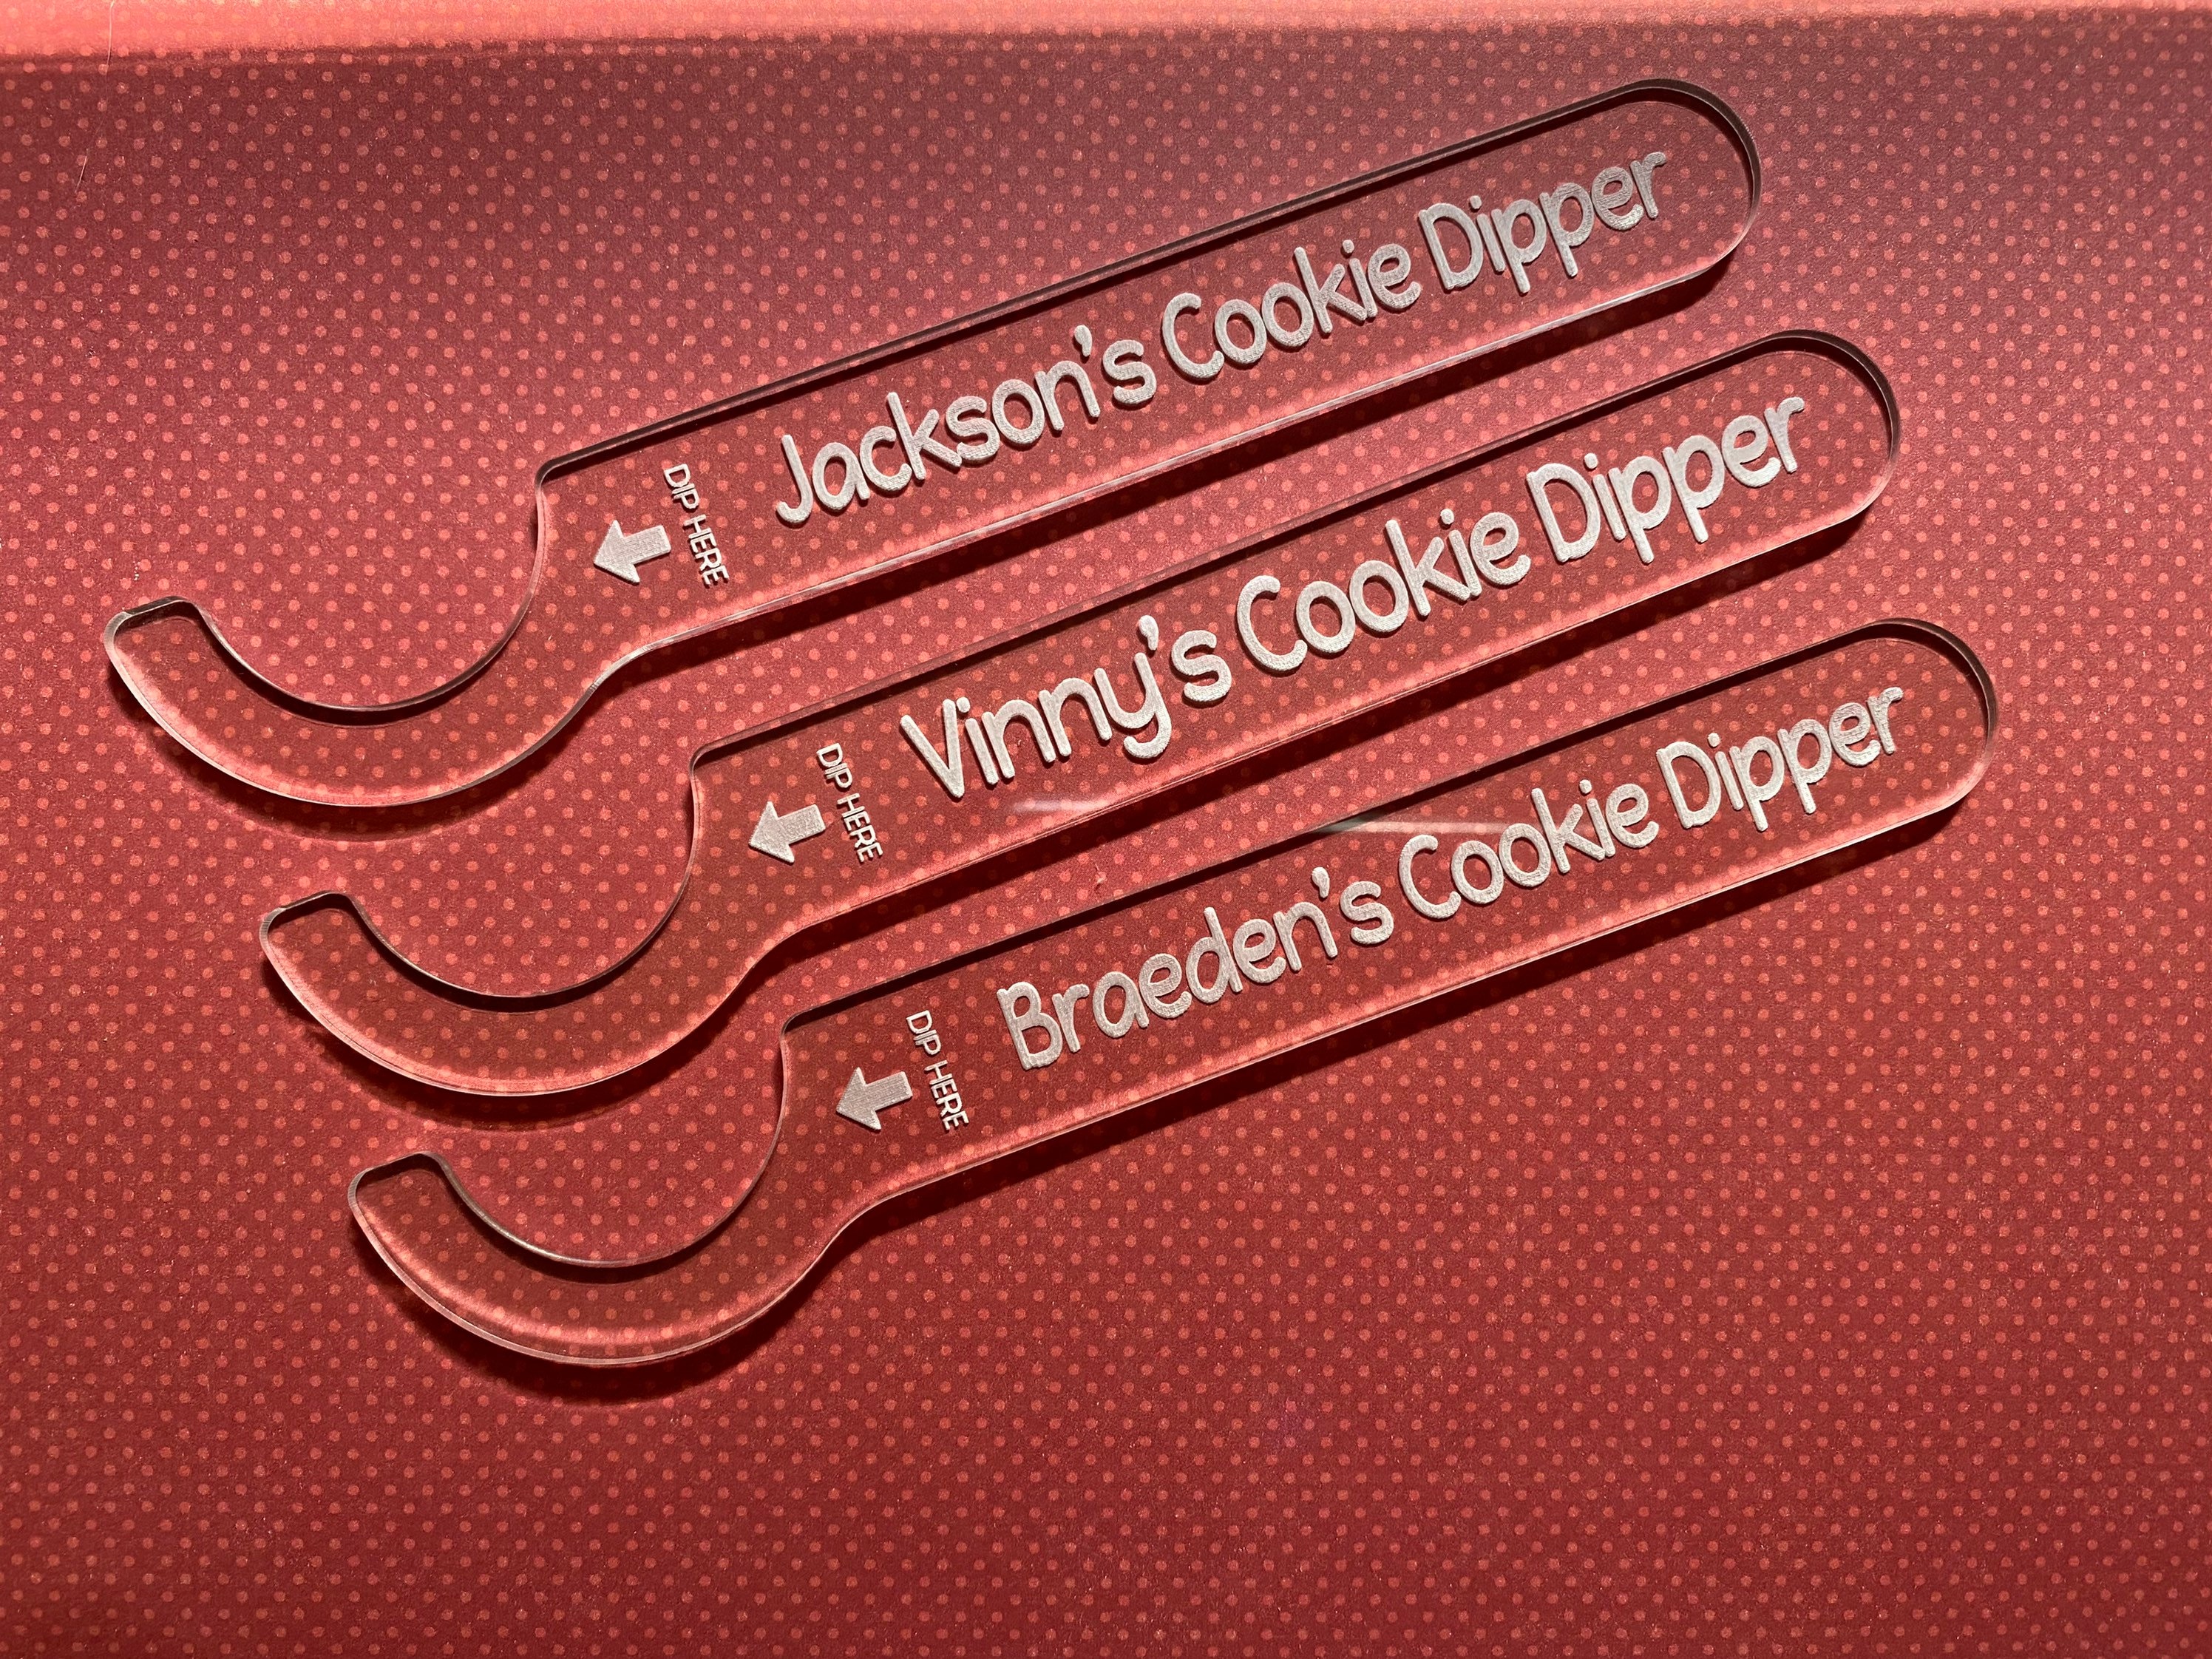 The Cookie Spoon Cookie Dipper Laser Engraved 